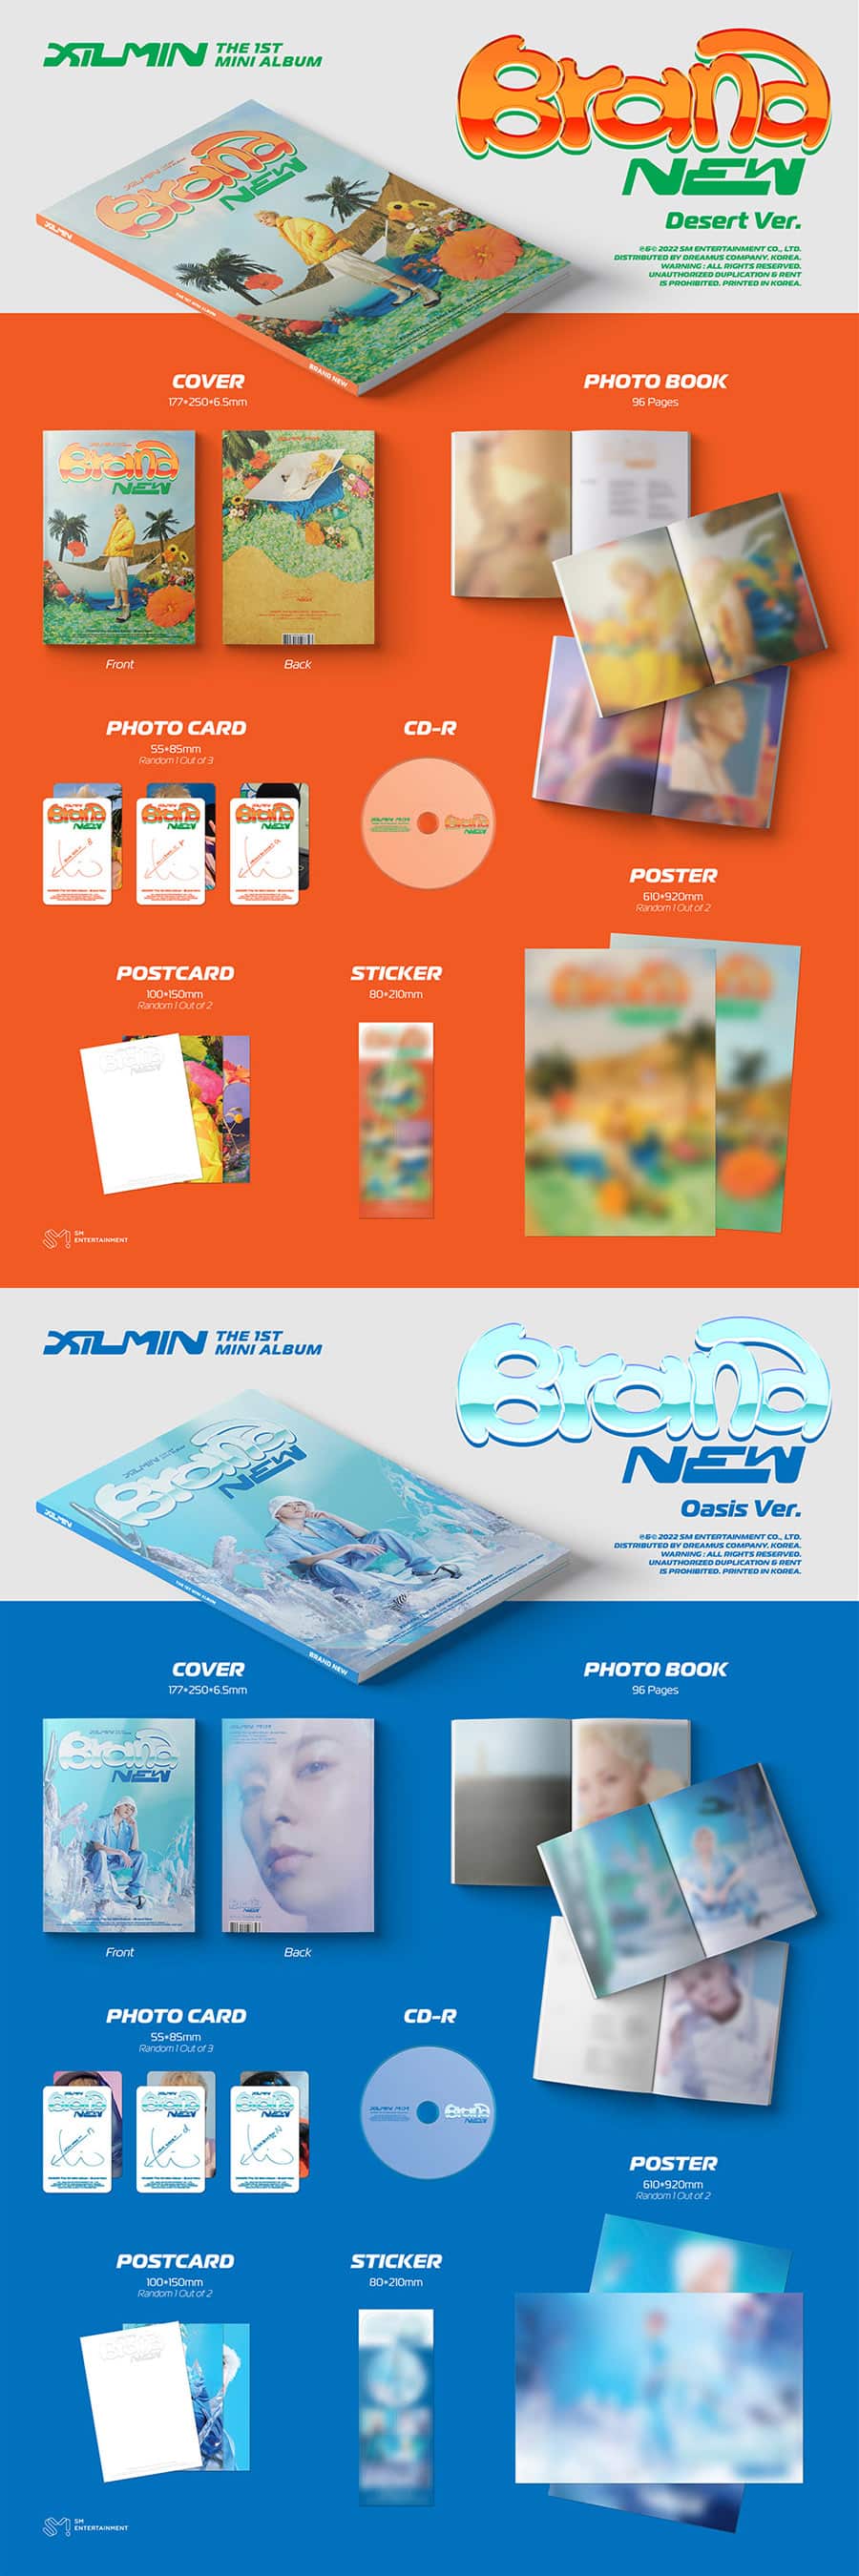 xiumin-exo-1st-mini-album-brand-new-photobook-wholesale